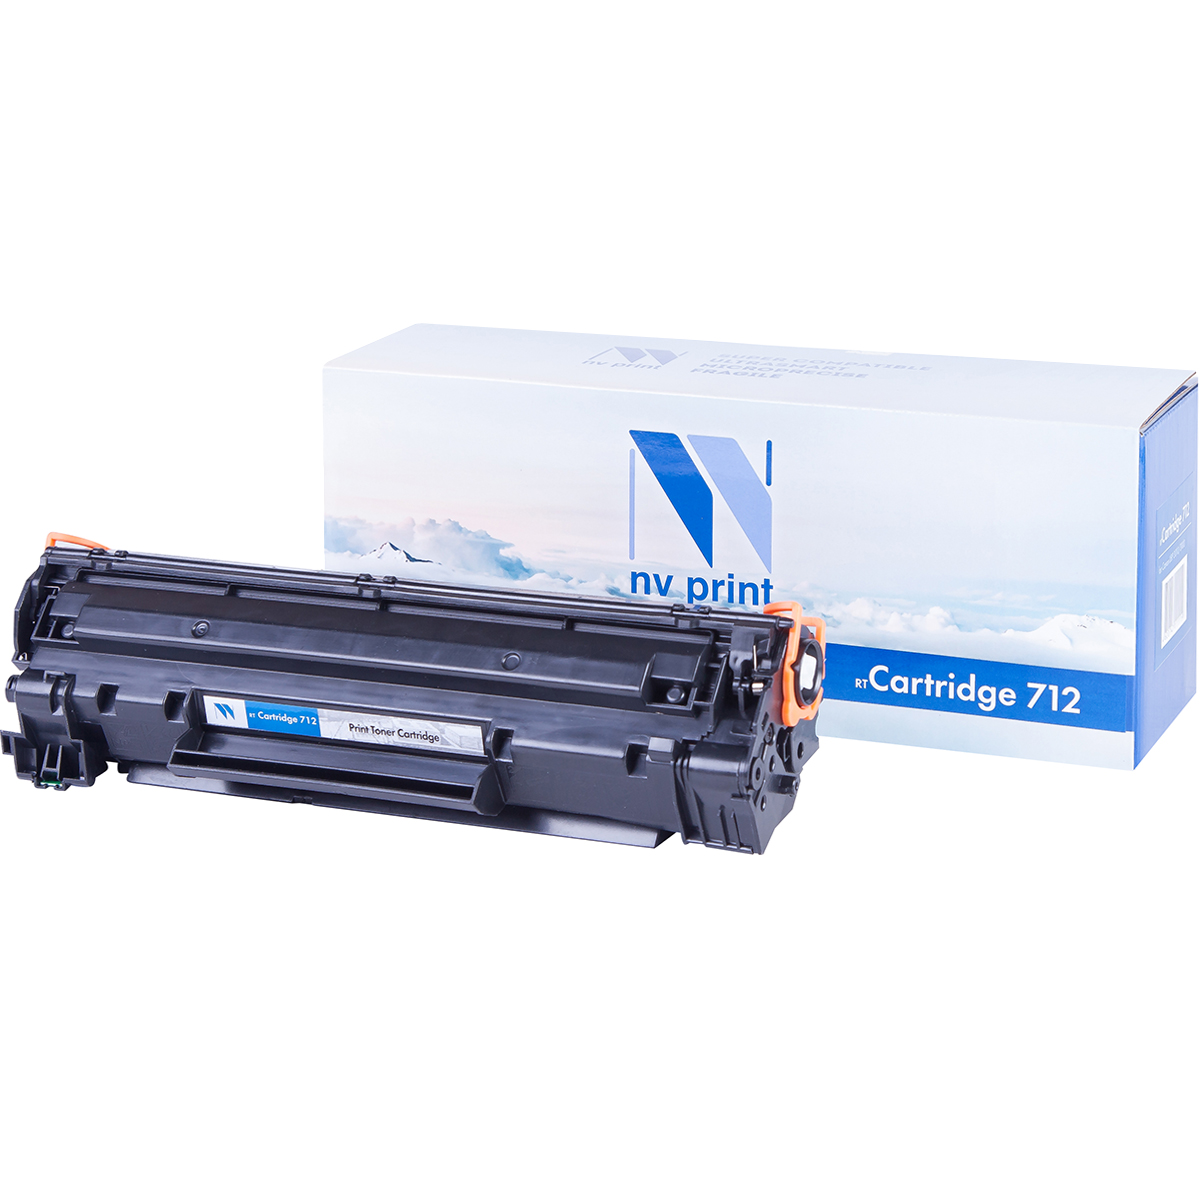   NV Print NV-712 (Canon i-SENSYS LBP3010, 3010B, 3100, 1500.)